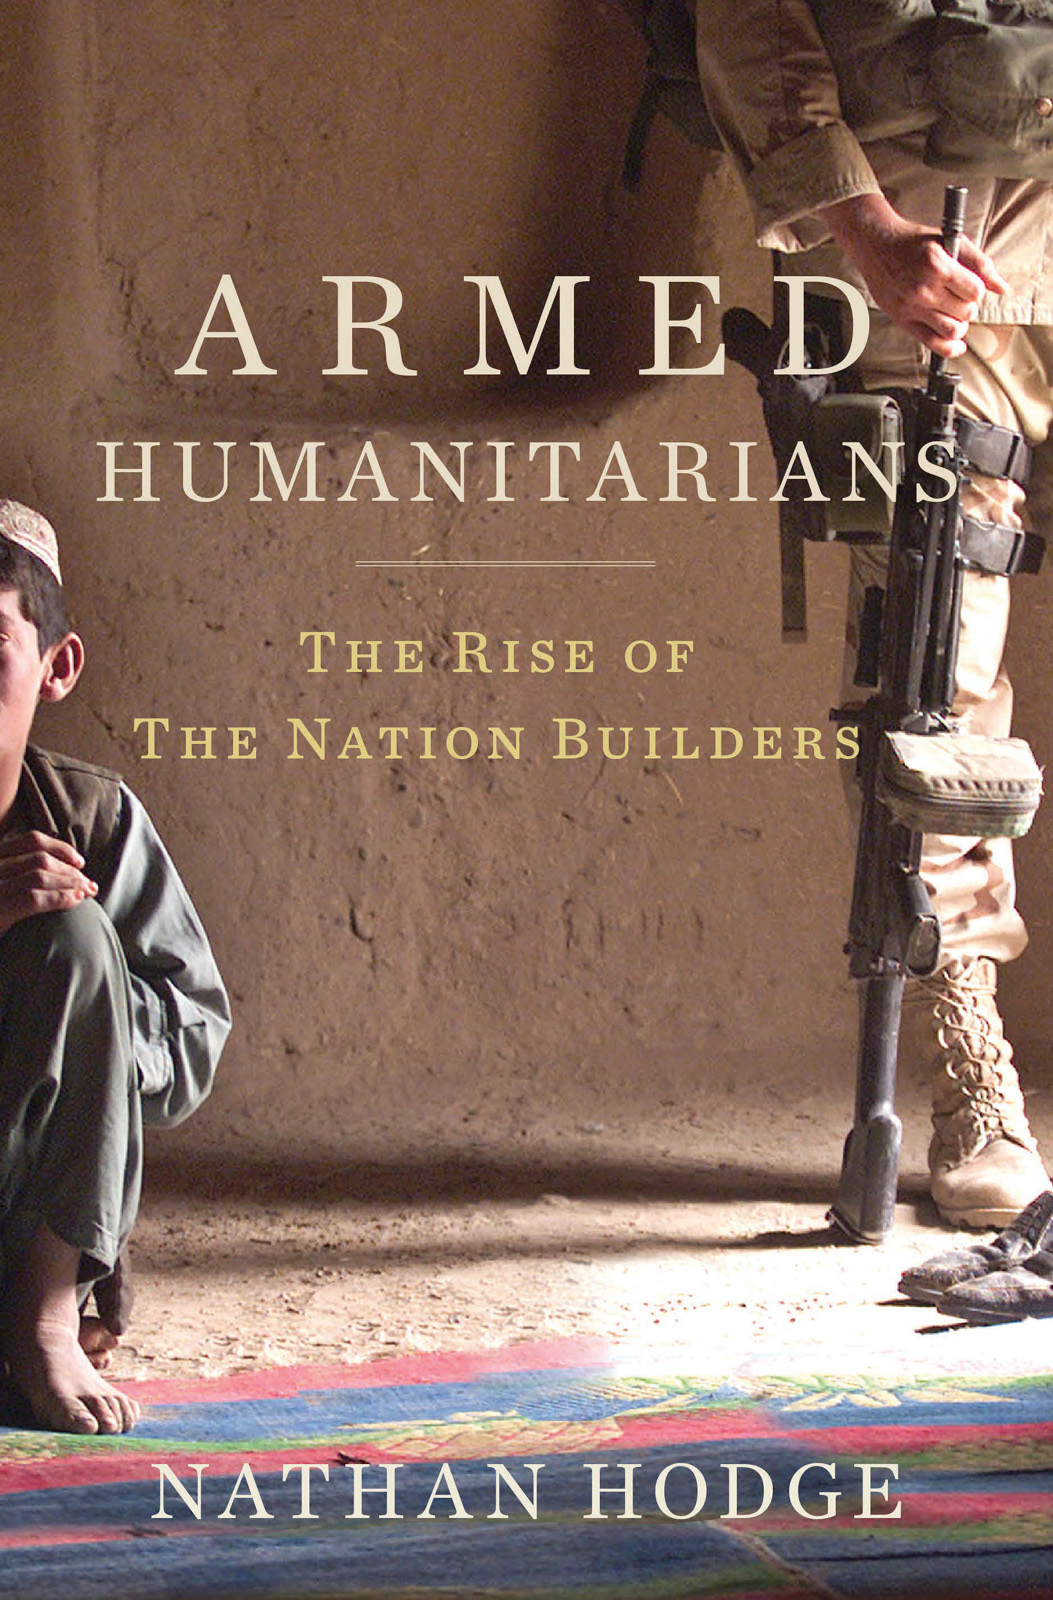 Armed Humanitarians by Nathan Hodge